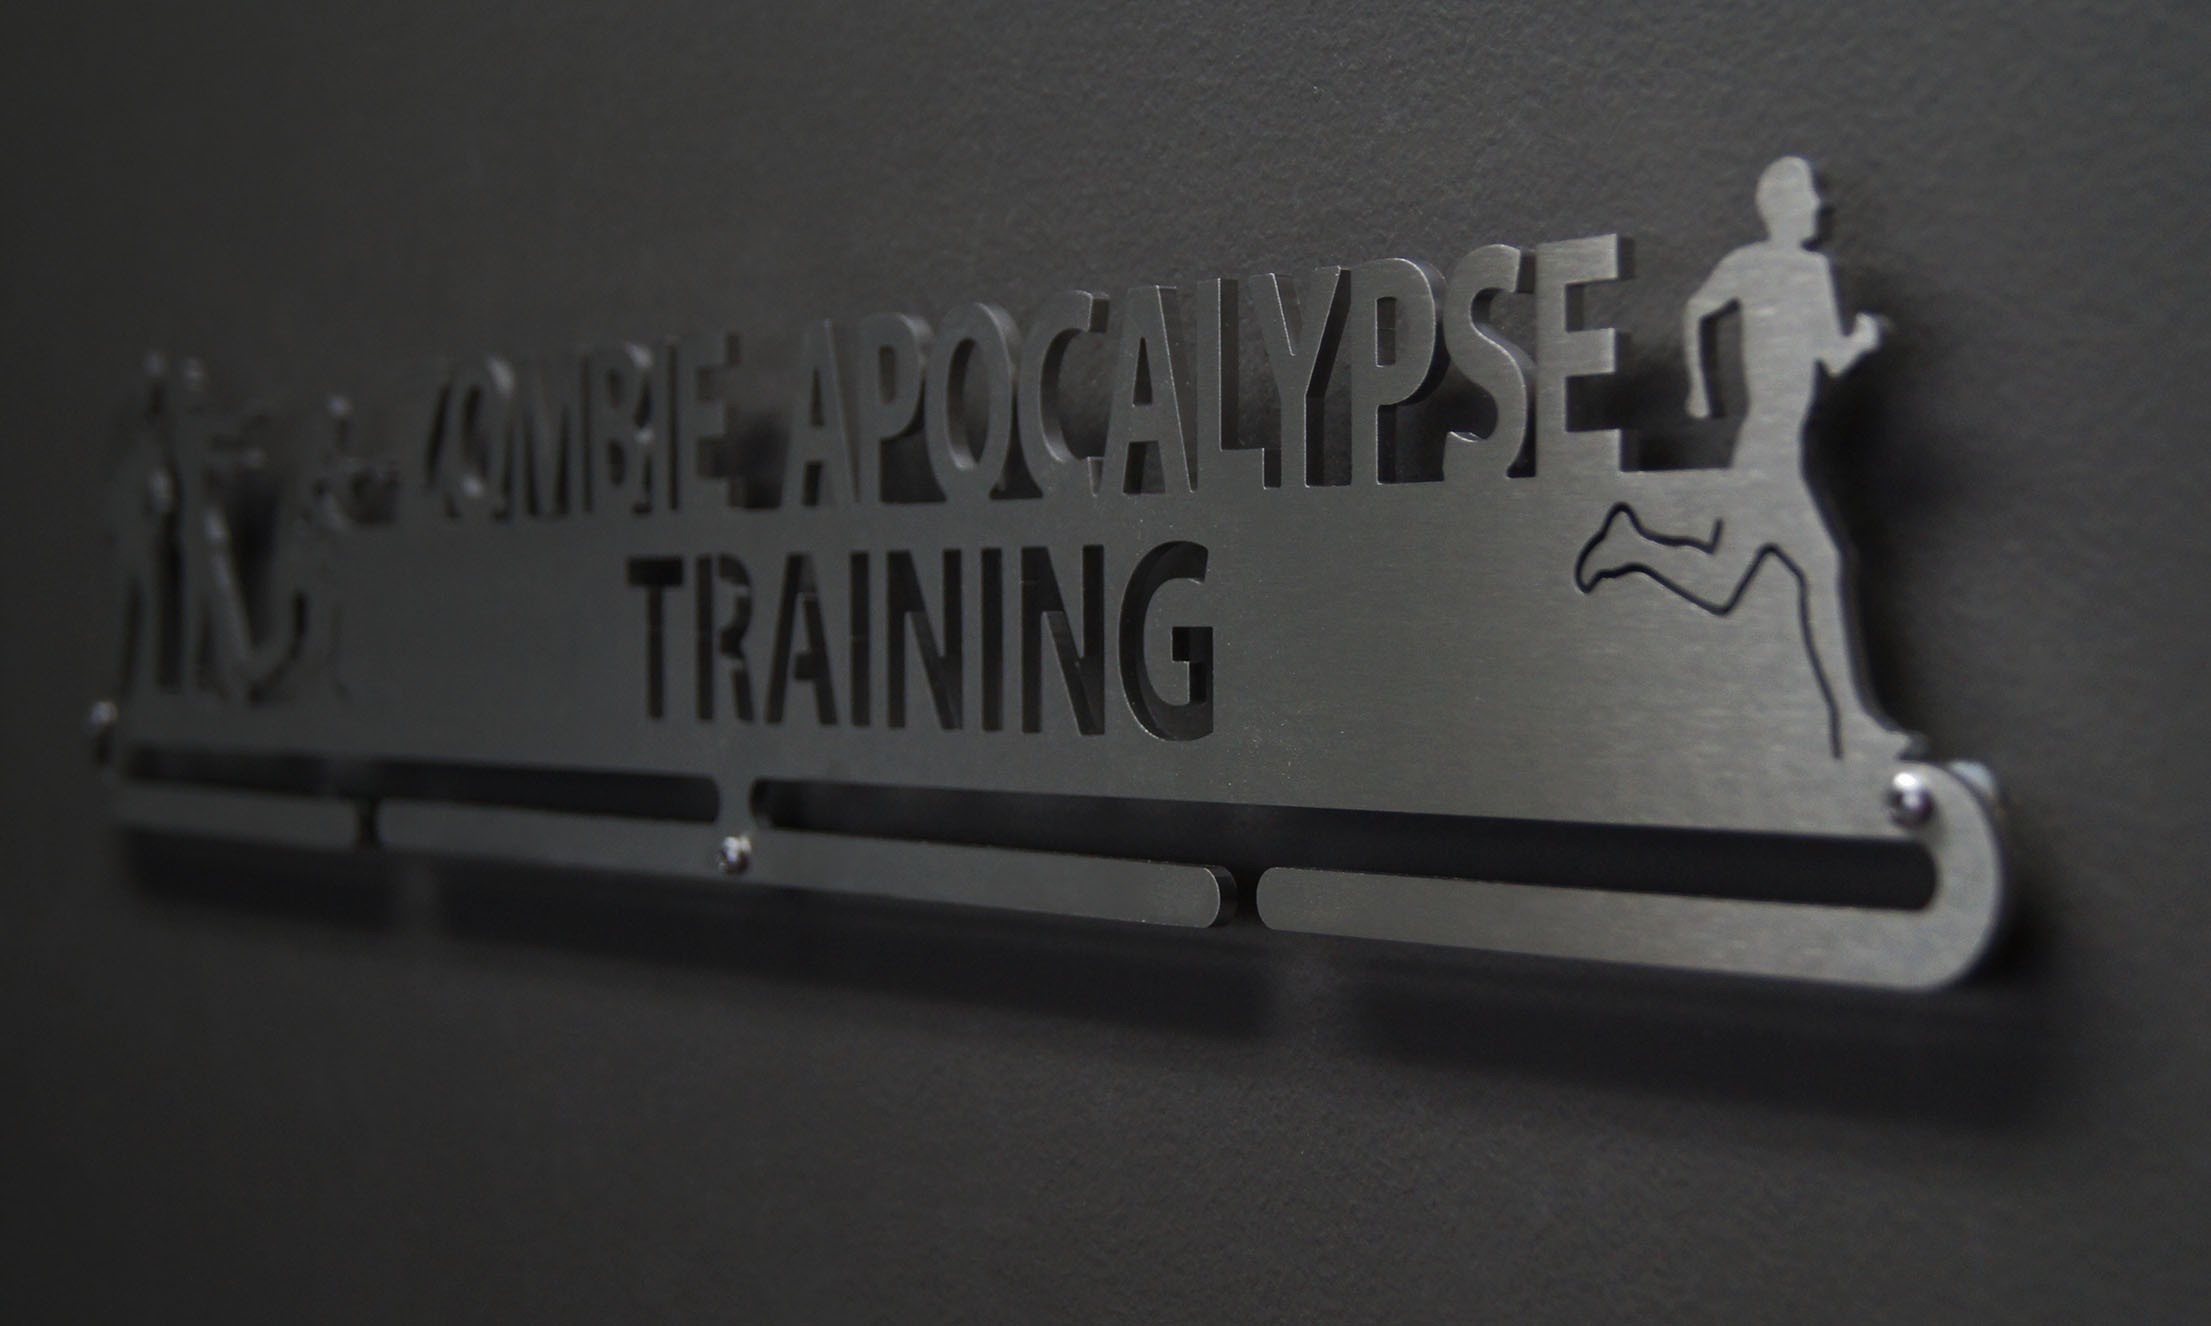 Zombie Apocalypse Training - Male 